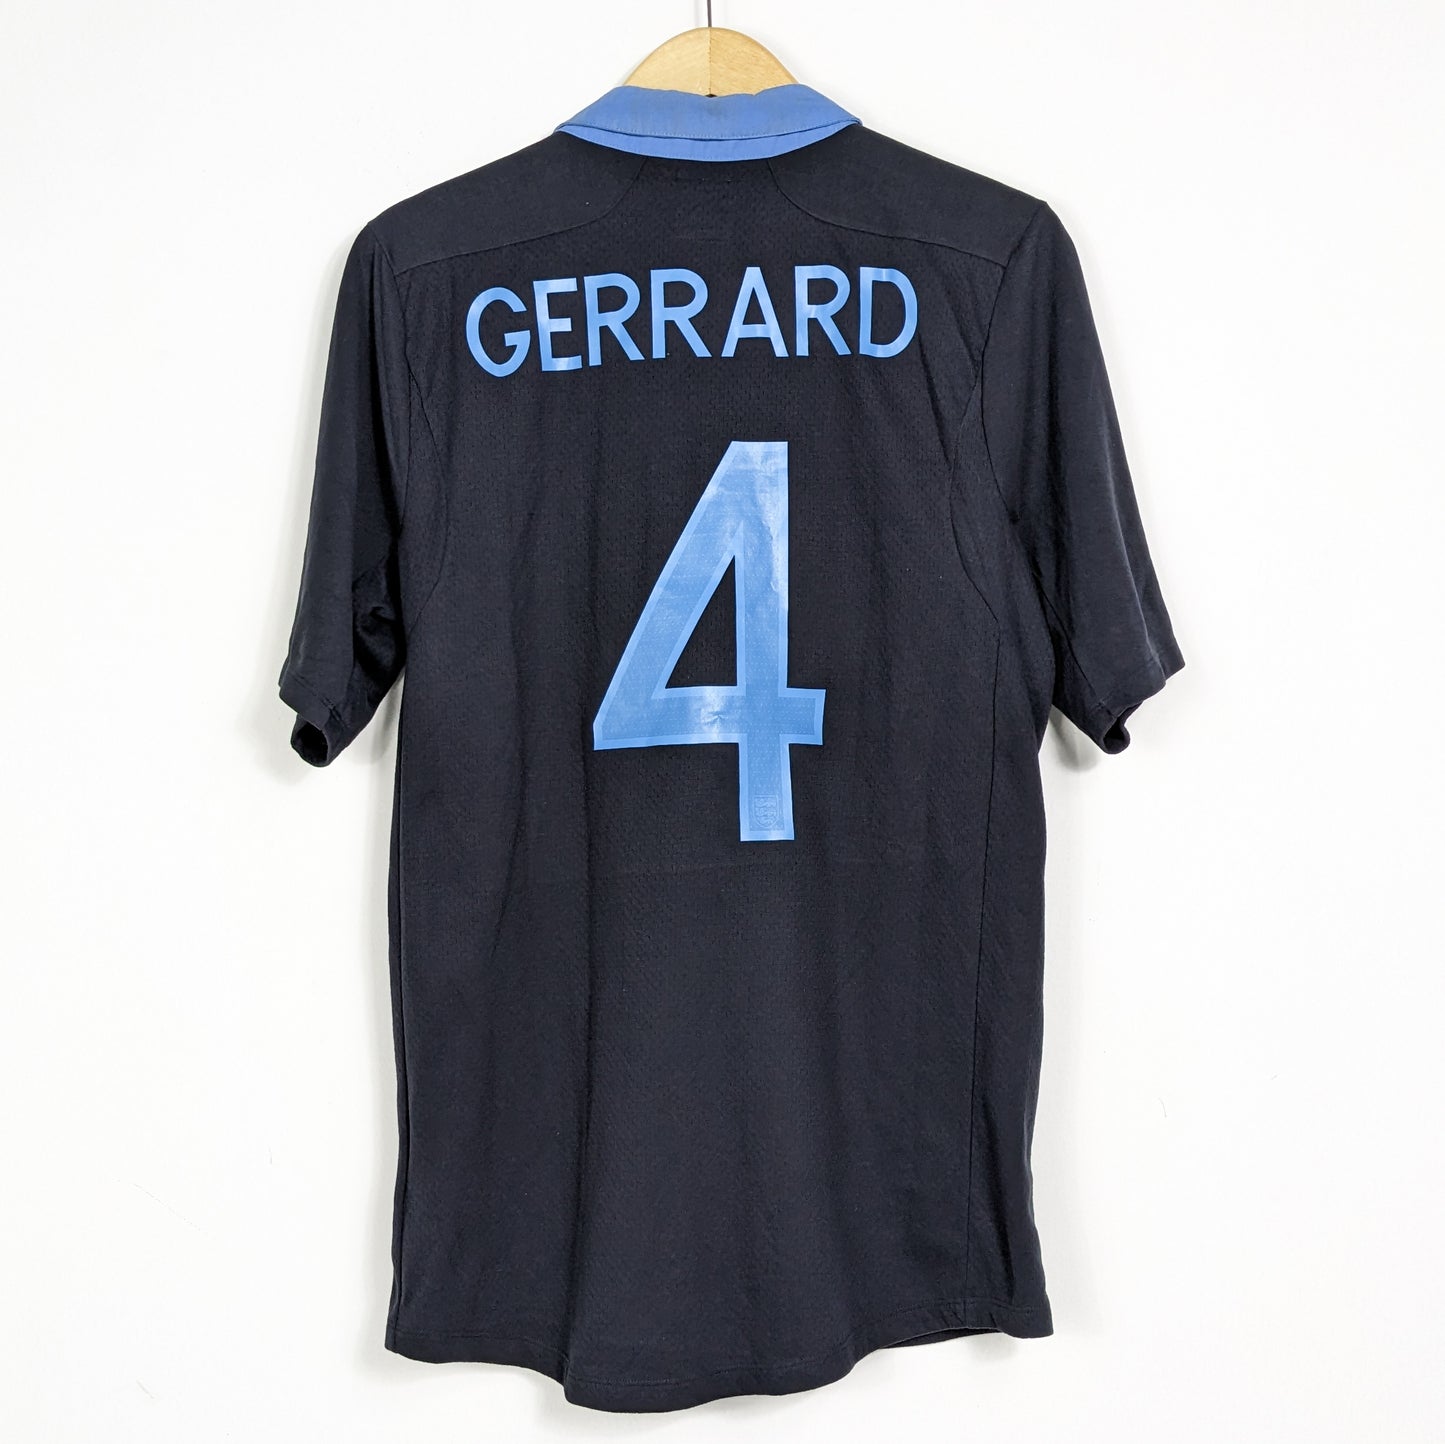 Authentic England 2011/2012 Away - Gerrard #4 Size L